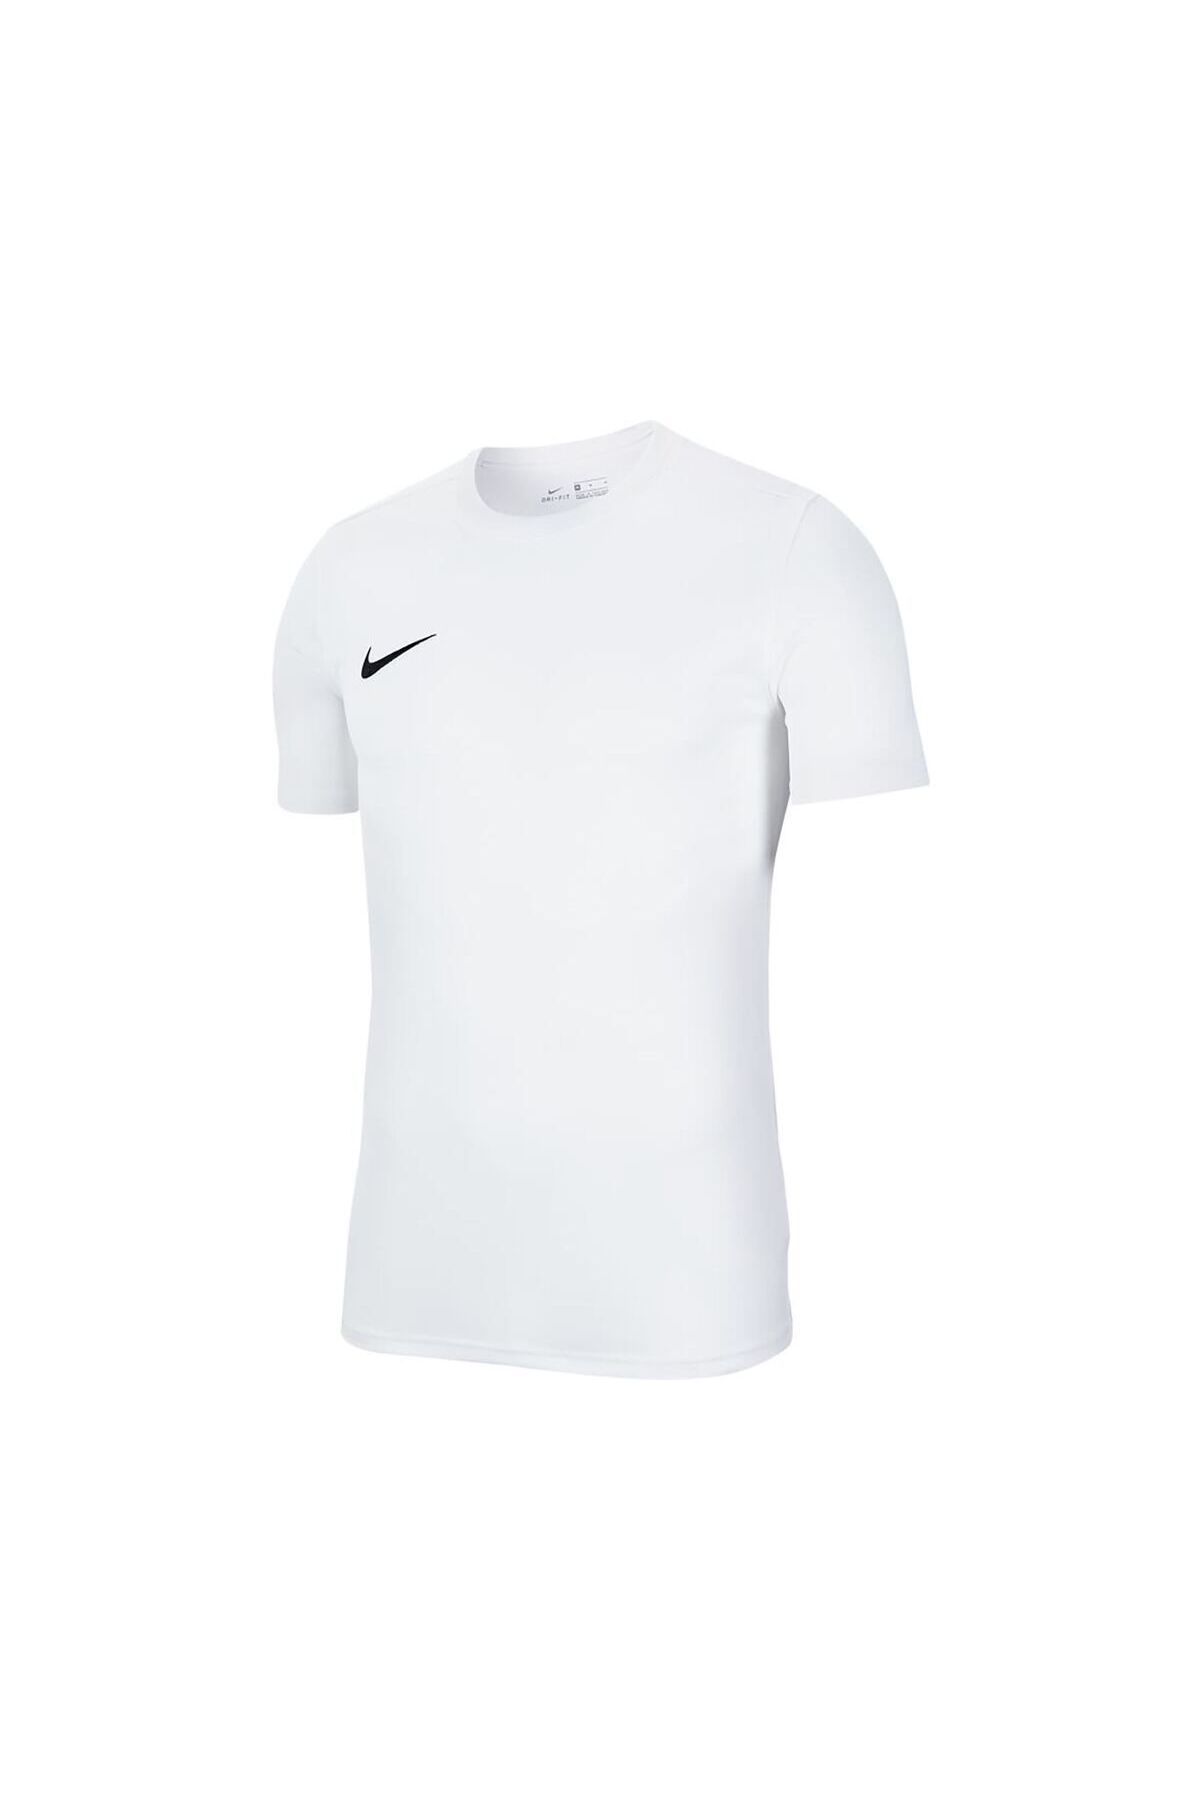 Nike Dry Park Vıı Erkek Tişört Bv6708-100